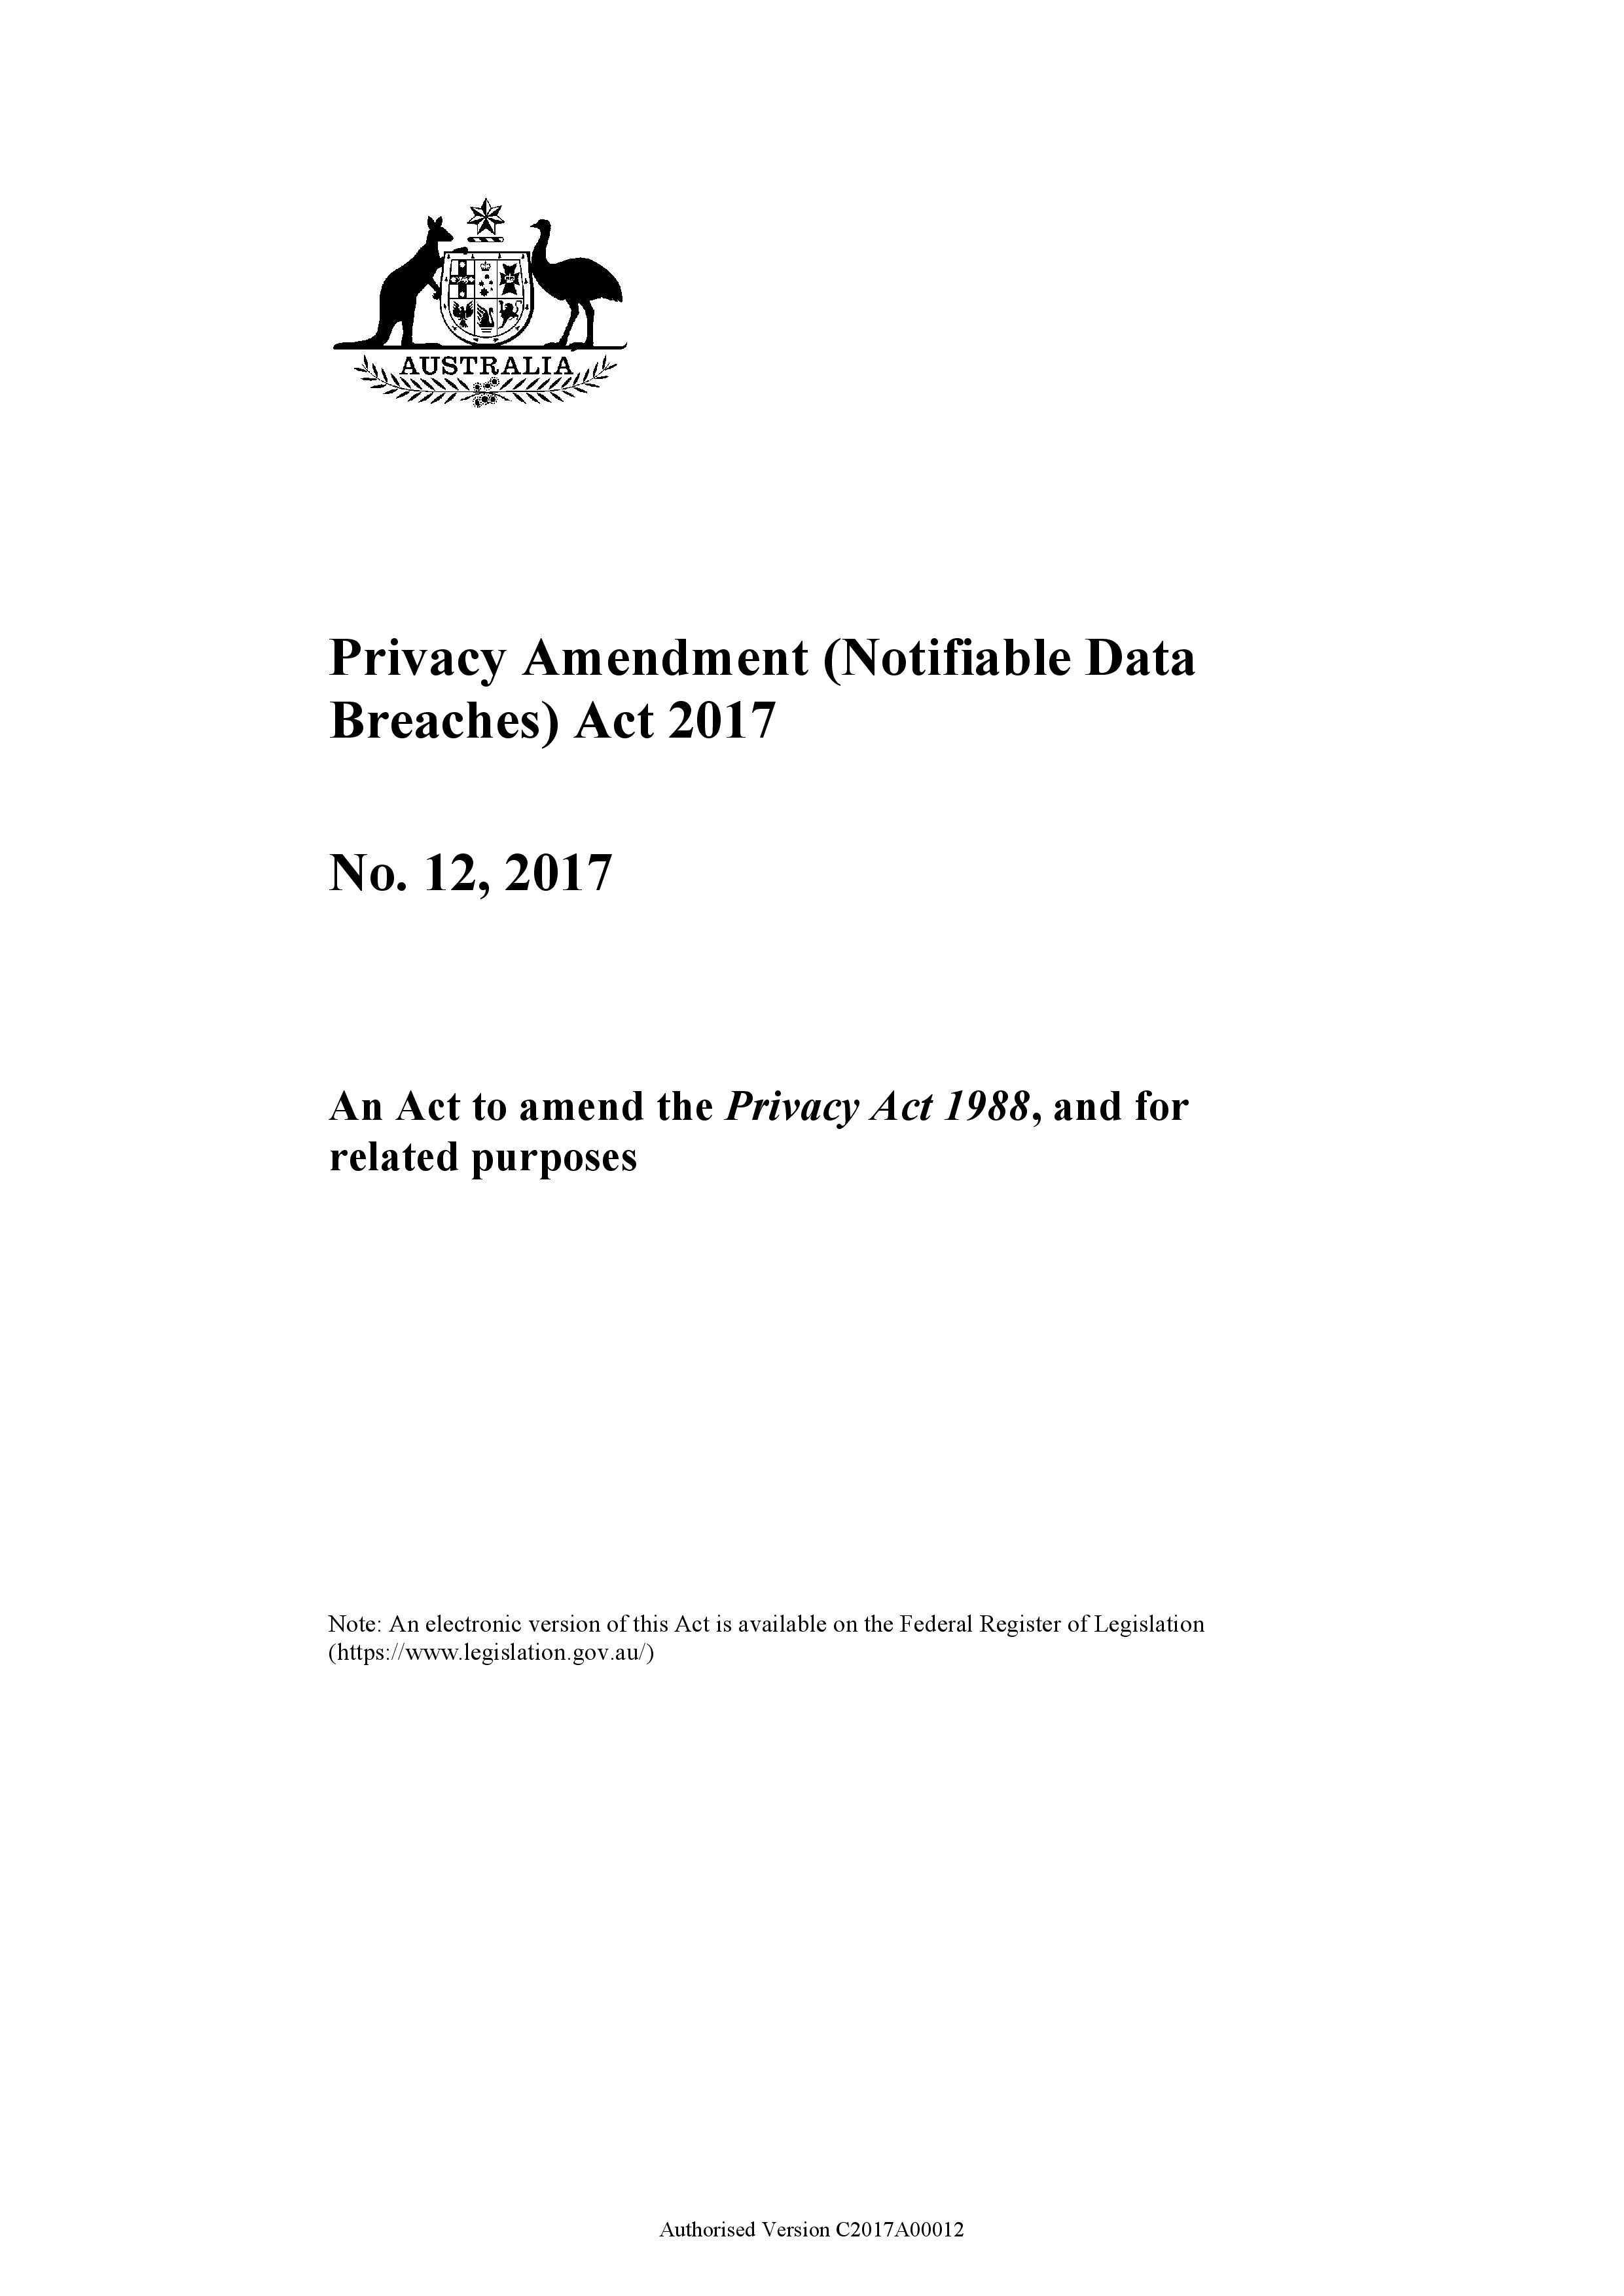 Australian Privacy Amendment Act 2017